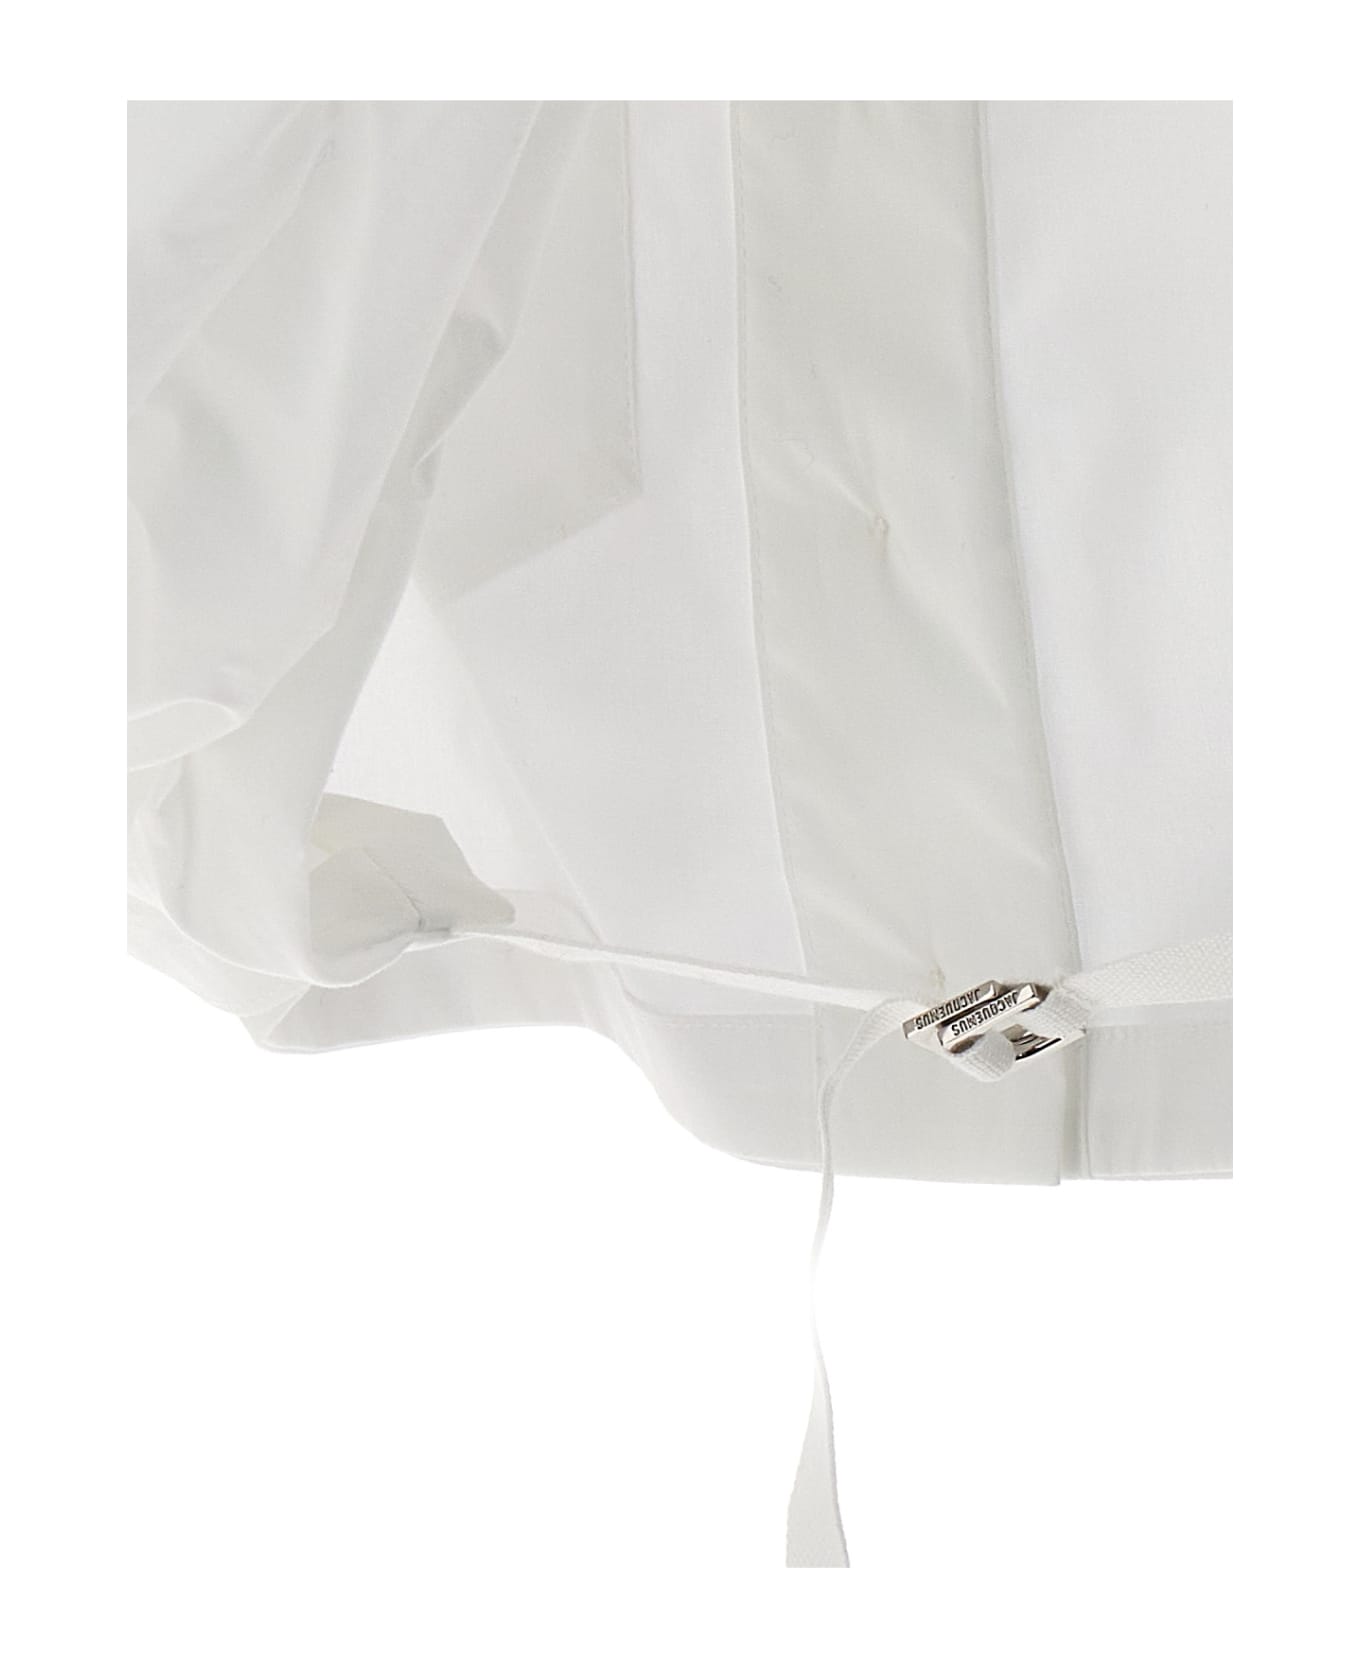 Jacquemus 'la Chemise Pavane' Shirt - White